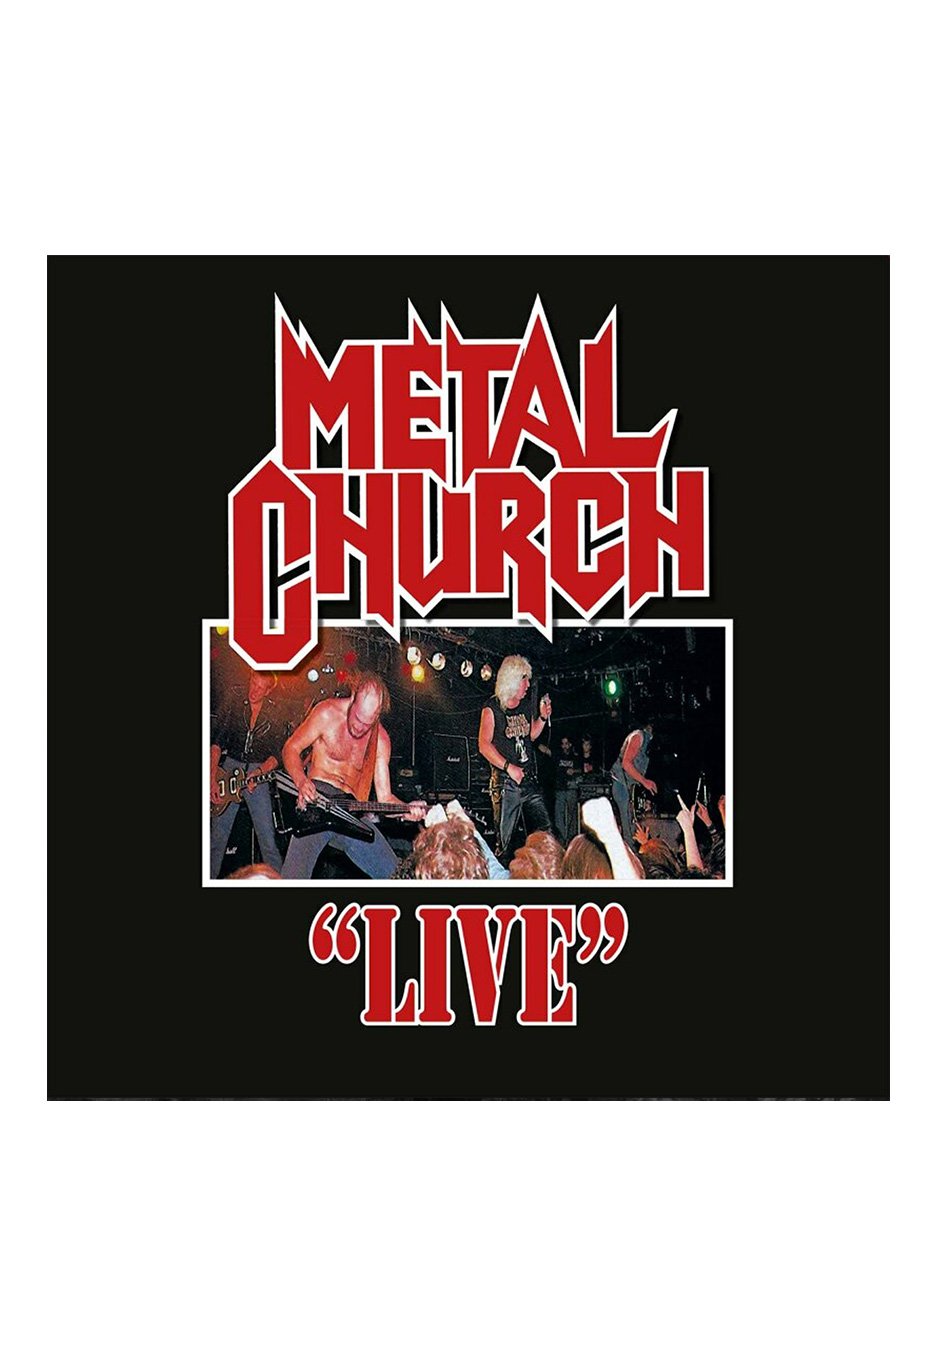 Metal Church - Live Ltd. White/Red Half/Half - Colored Vinyl